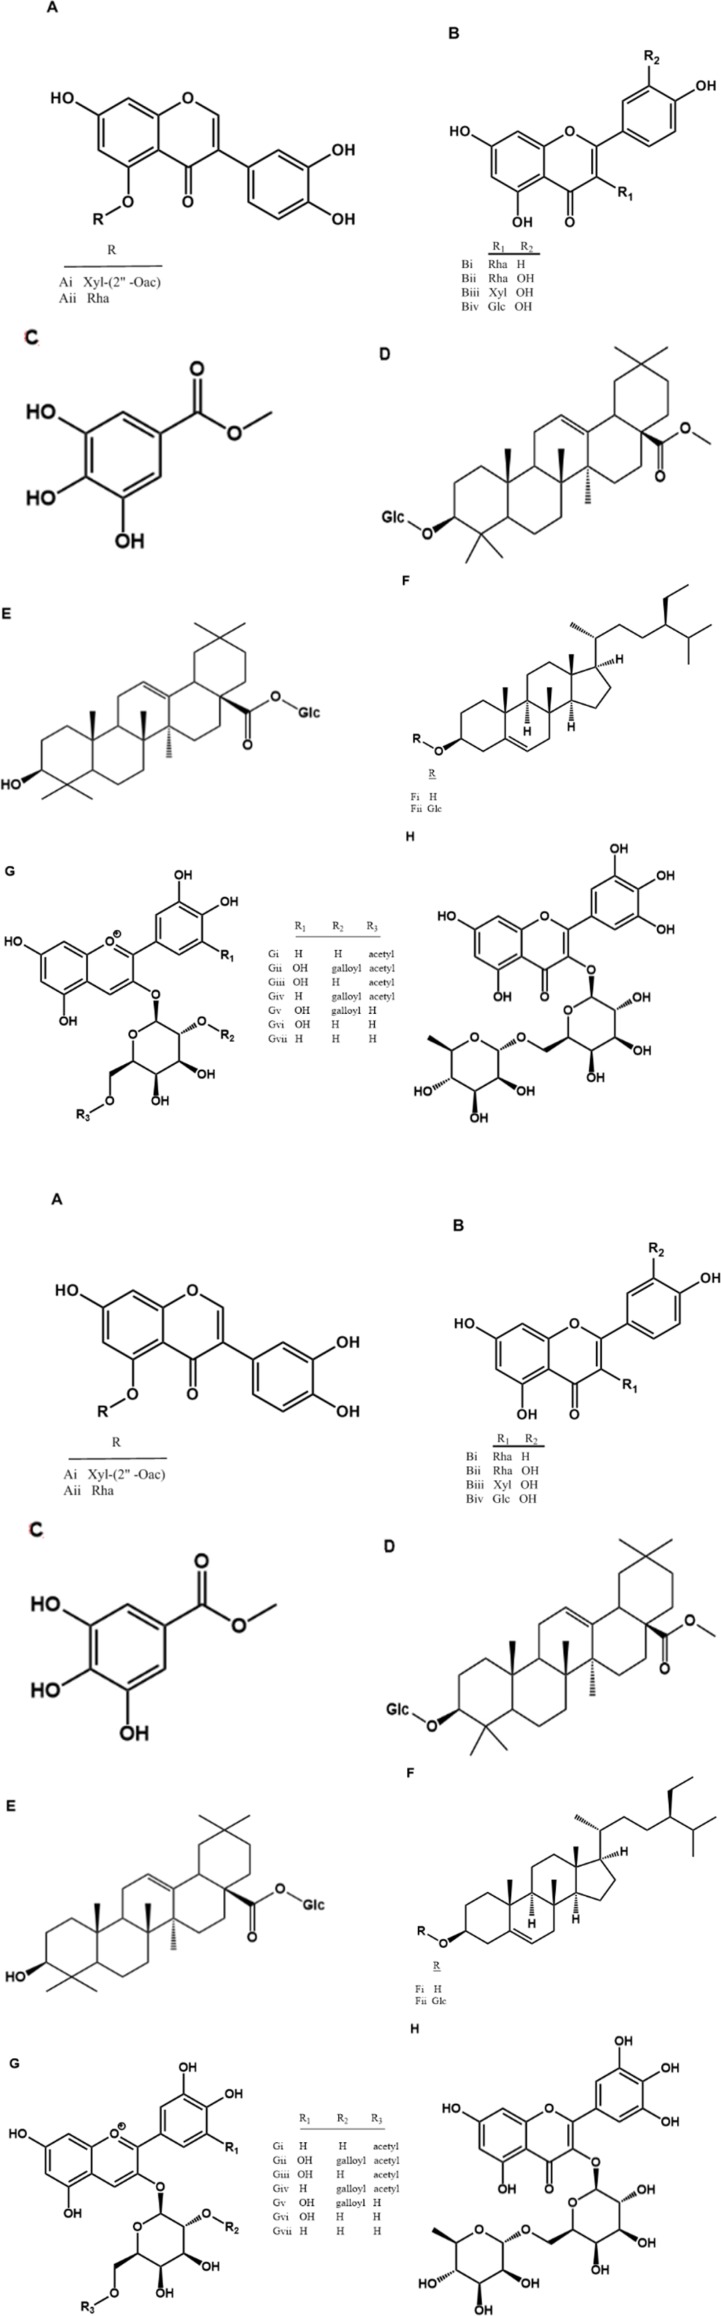 Natural products isolated from Nymphaea spp. (A) 5-glycosyl isoflavones, (B) 3-glycosyl flavones, (C) methyl gallate (D) methyl 3-O-β-D-glucopyranosyloleanolate, (E) 28-O-β-D-glucopyranosyloleanolate, (F) sitosterols, (G) 3-O-glycosylated anthocyanins, (H) myricetin 3-O-α-L-rhamnopyranosyl(1→6)β-D-galactopyranoside, (I) myricitrin (J) nympholide A, (K) nympholide B, (L) 1, 2, 3, 4, 6-pentagalloyl-D-glucose, (M) myricetin-3’-O-(6”-p-coumaroyl) glucoside